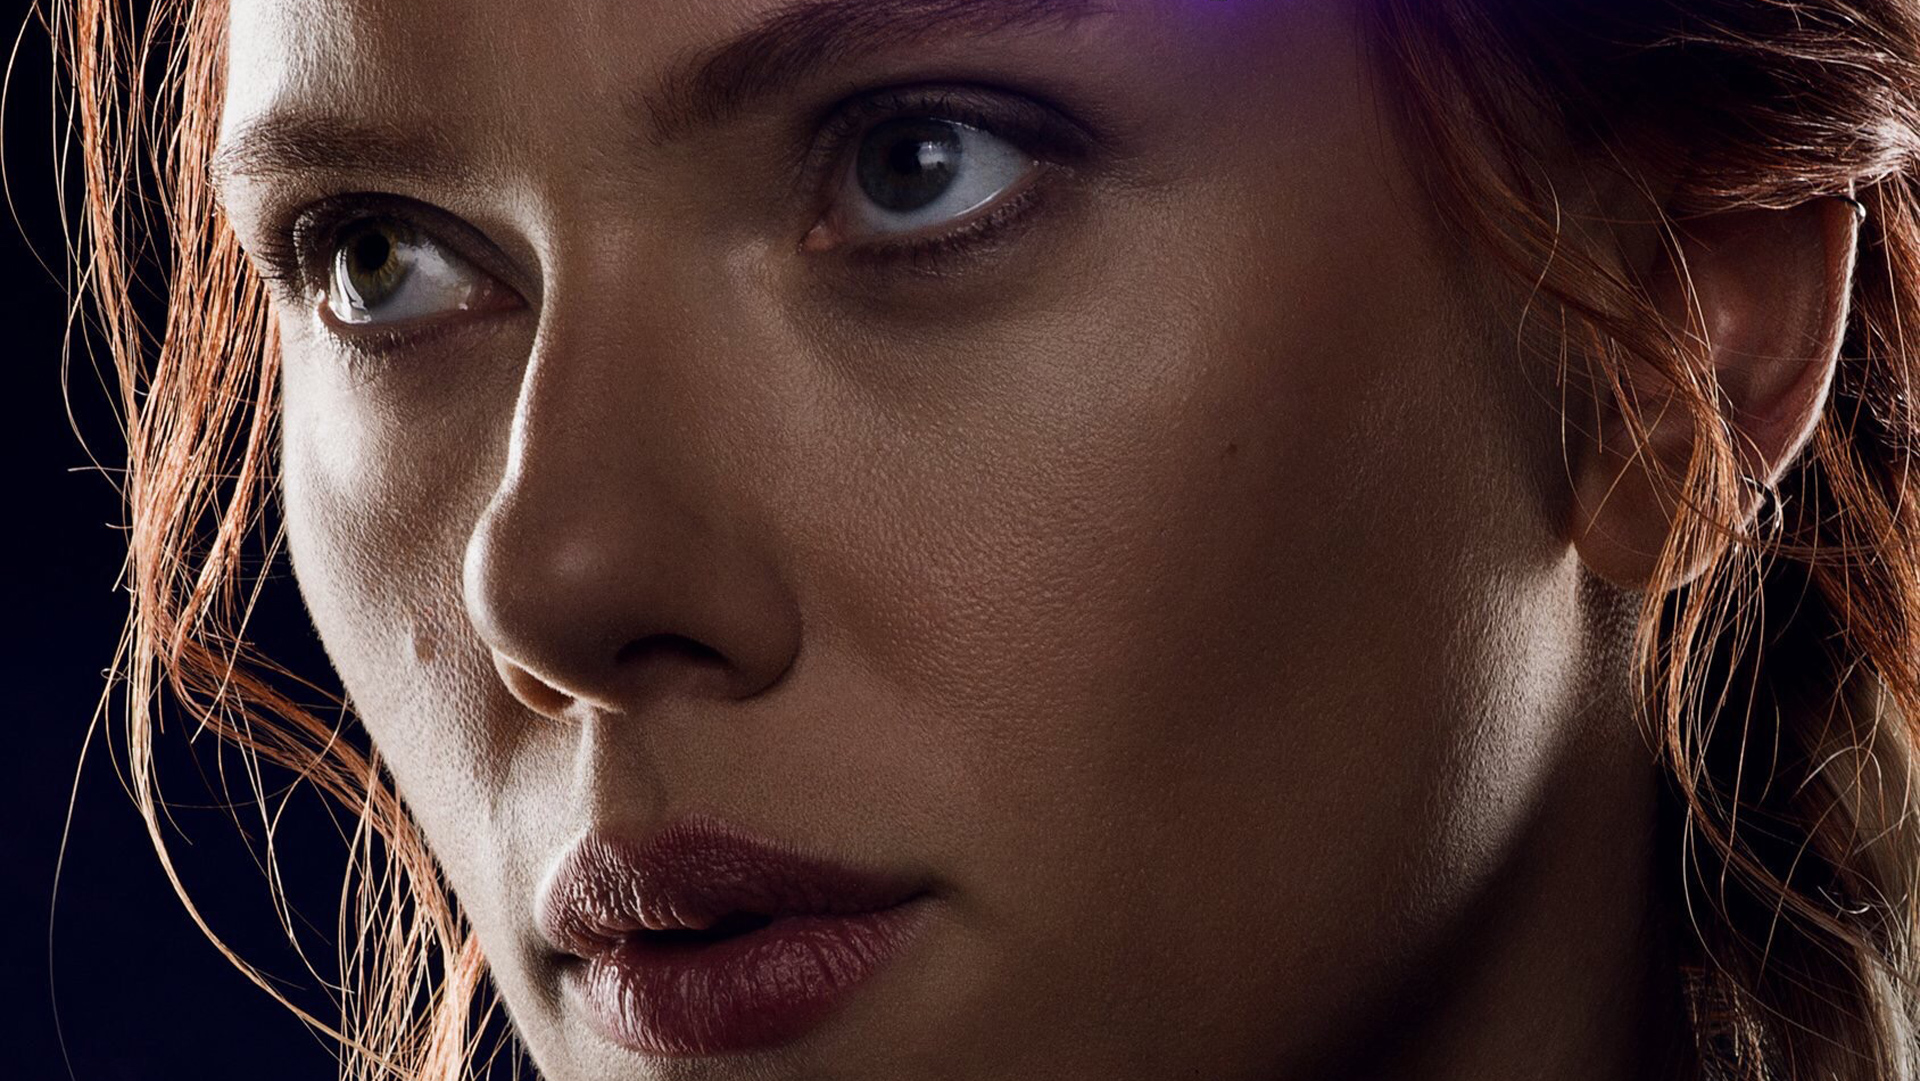 Descarga gratuita de fondo de pantalla para móvil de Scarlett Johansson, Los Vengadores, Películas, Viuda Negra, Natasha Romanoff, Vengadores: Endgame.